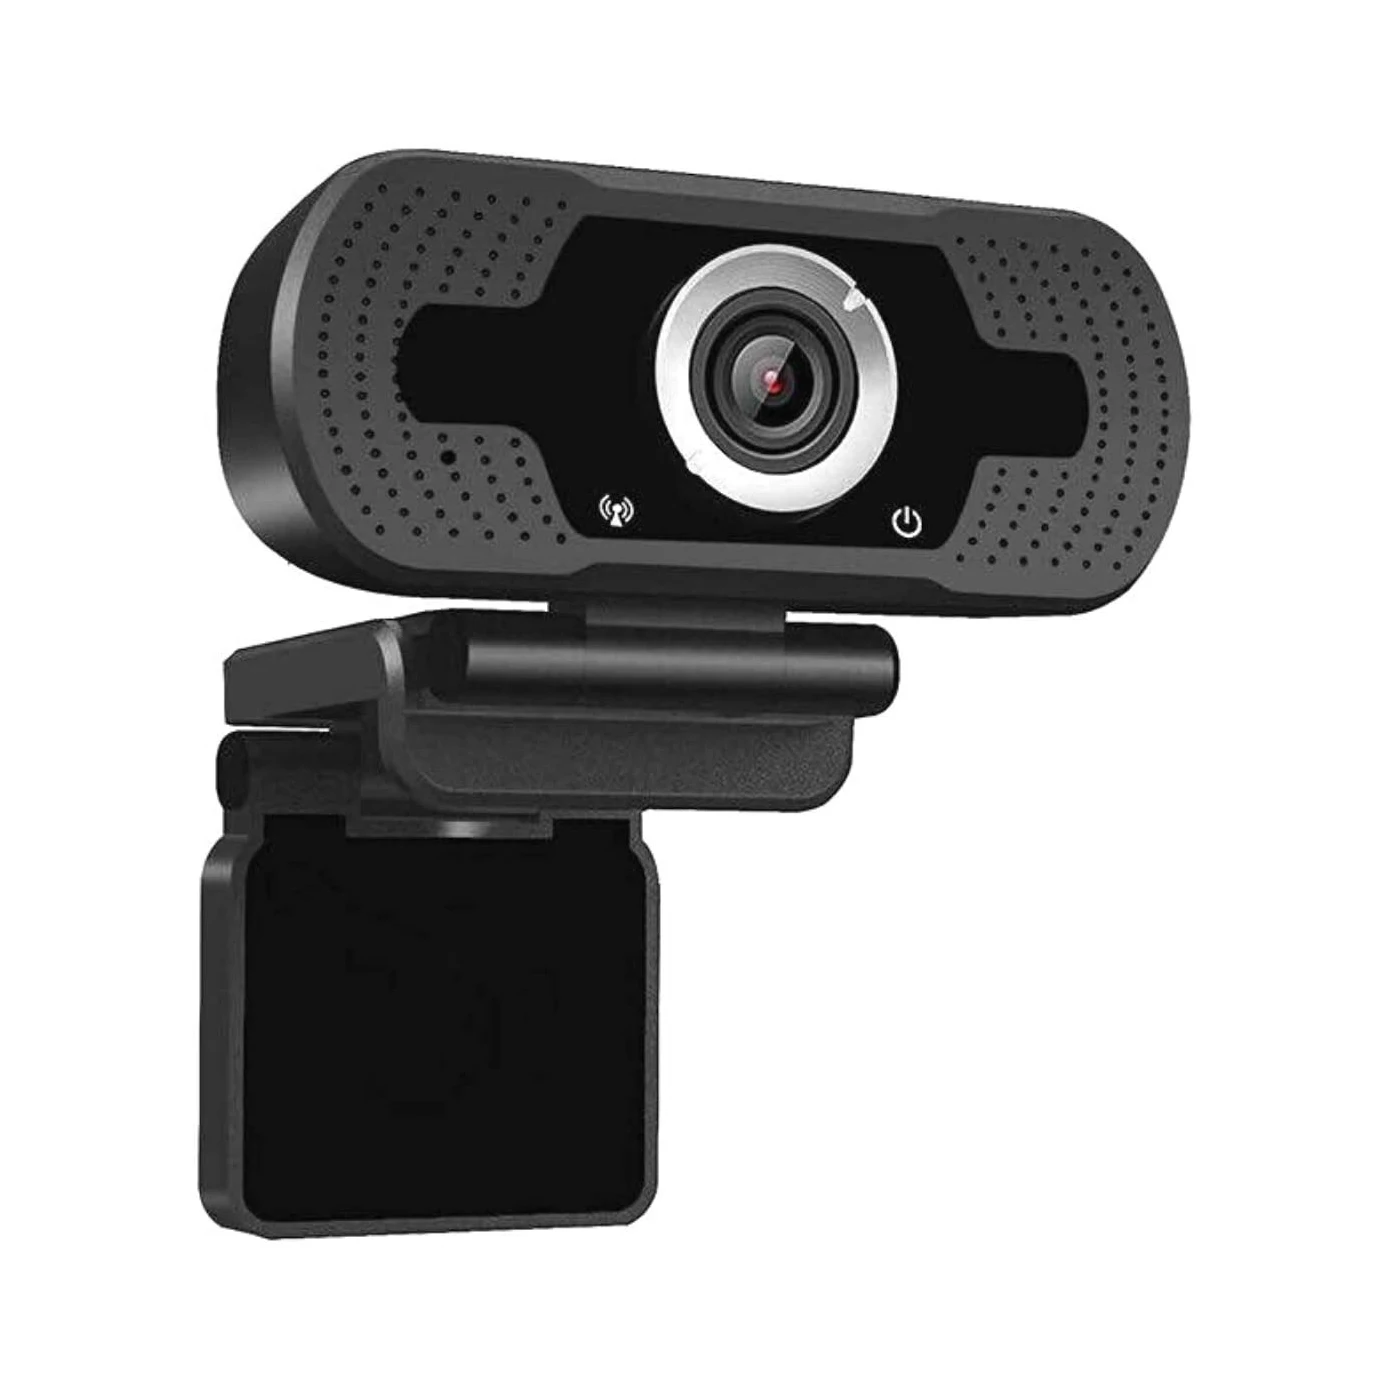 Portable Smart Digital Webcam Pc Laptop Online Chat Live Broadcast Full Hd 1080p Auto Focus 2 0 Usb Web Camera For Computer Buy Micro Usb Web Camera Web Camera 1080p For Video Calling Web